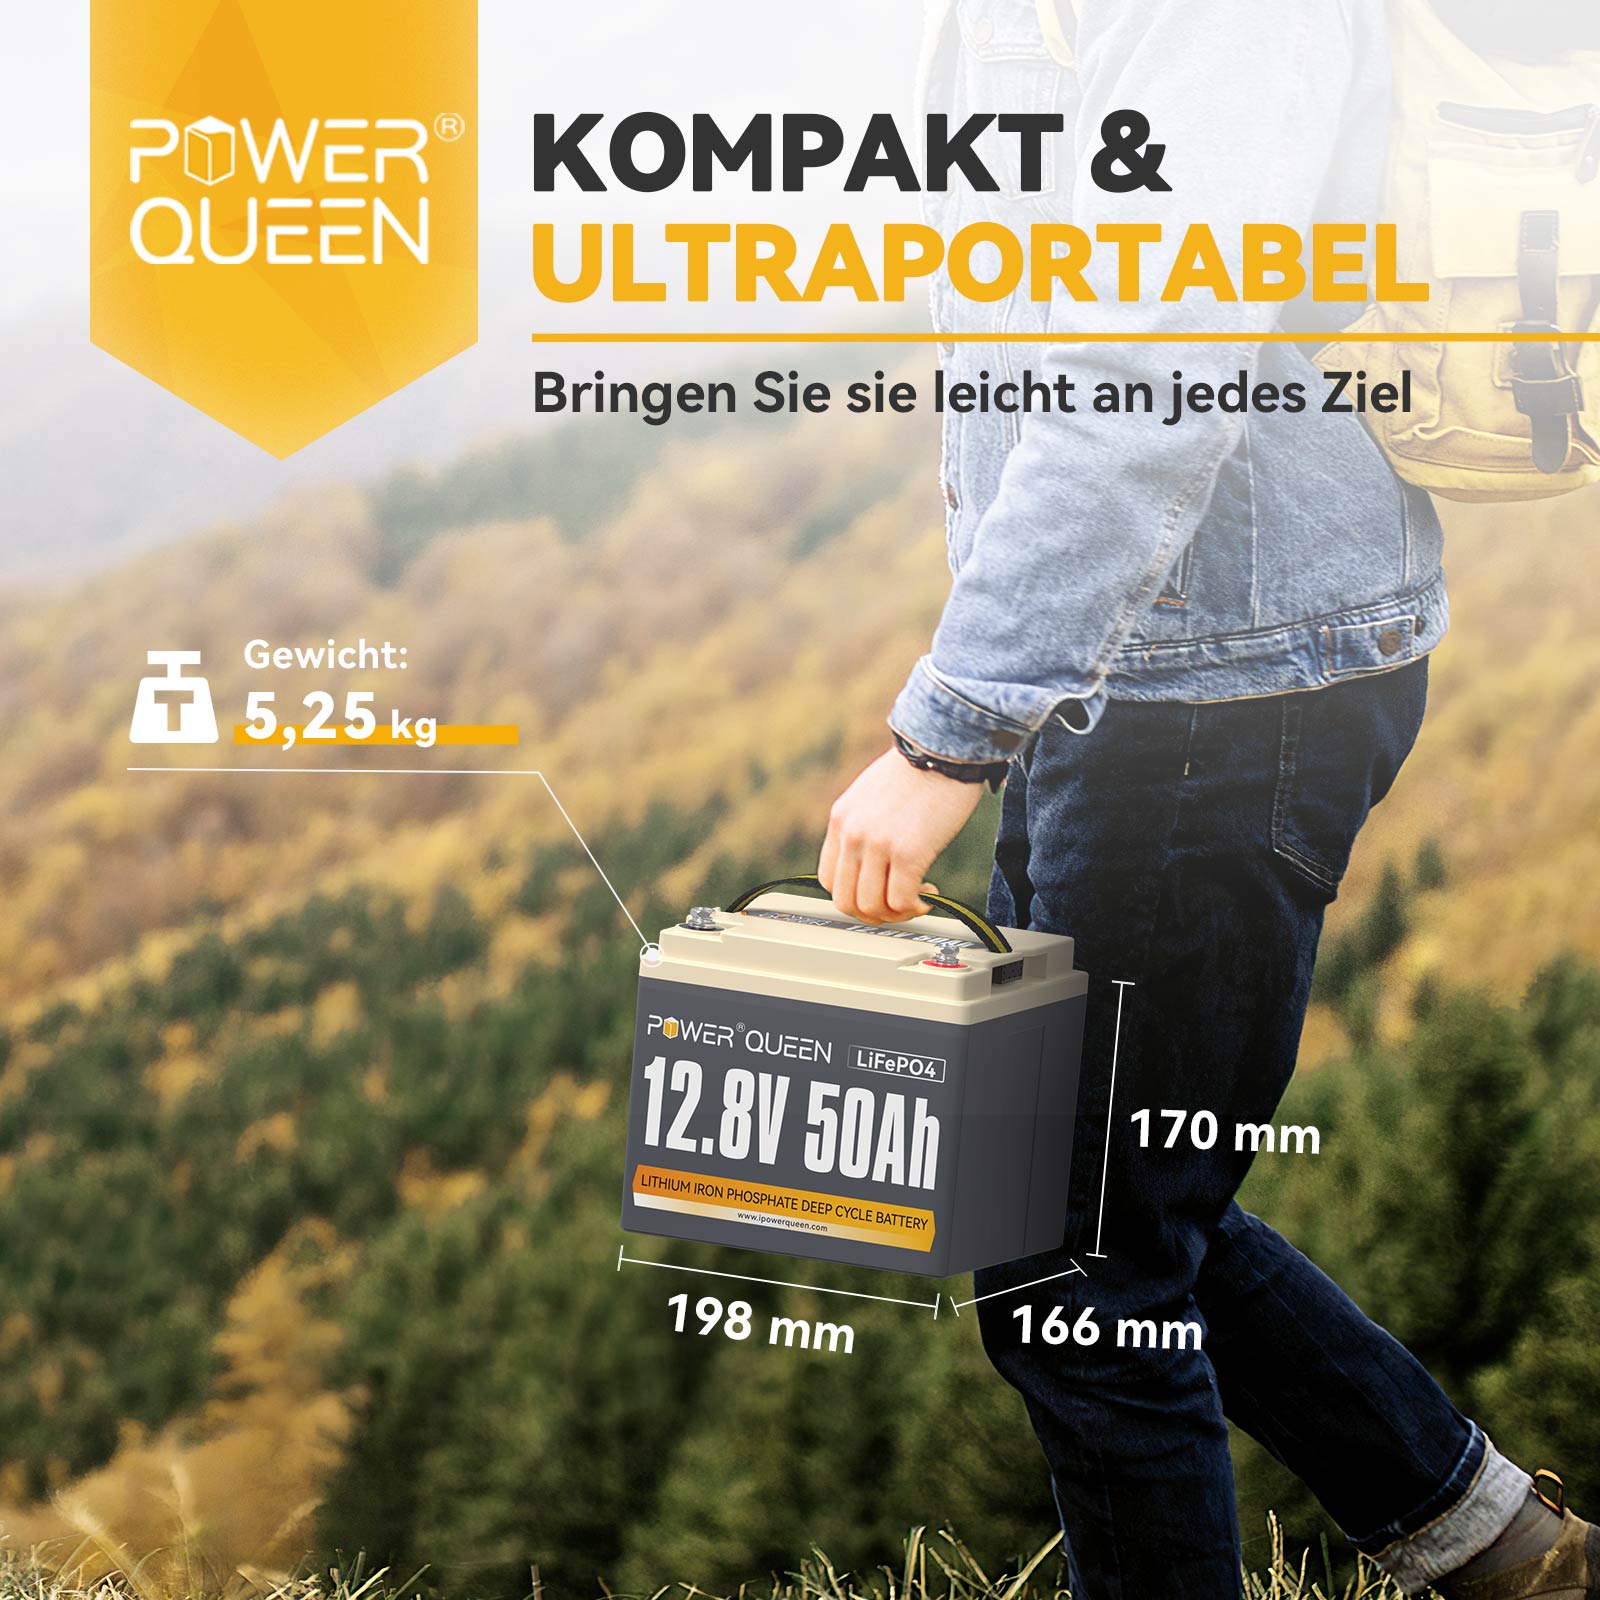 【0% BTW】Power Queen 12,8 V 50 Ah LiFePO4-batterij, ingebouwd 50 A BMS